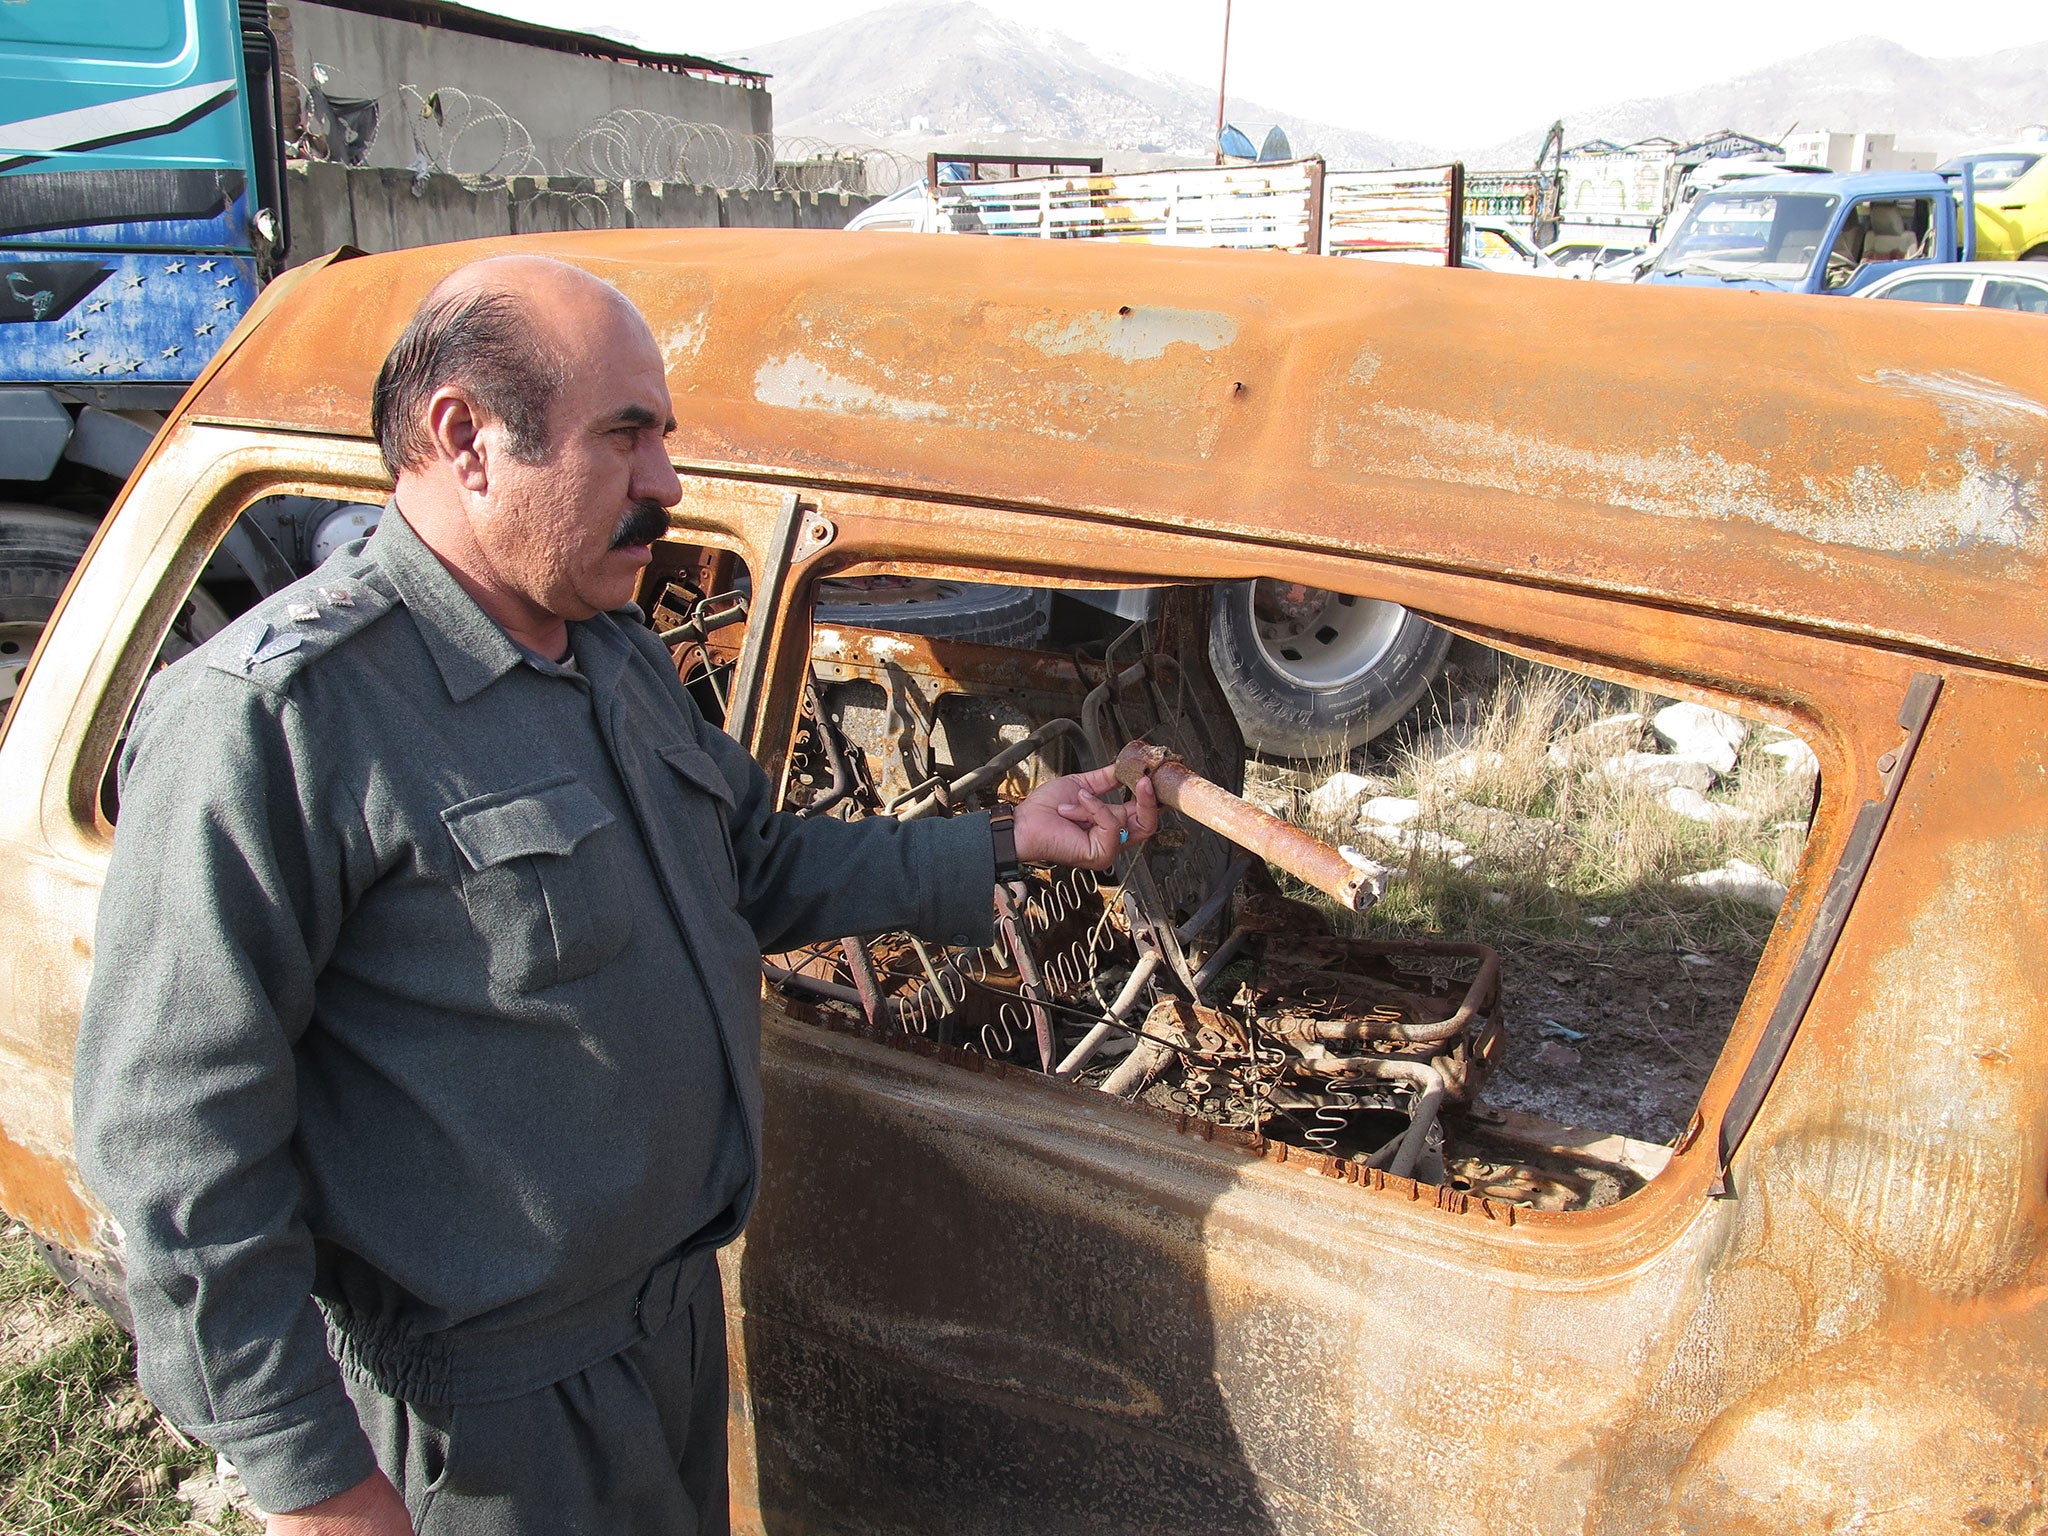 Miragha Gulbahari picks up a rocket-propelled grenade from a charred minivan used in a Taliban bomb attack